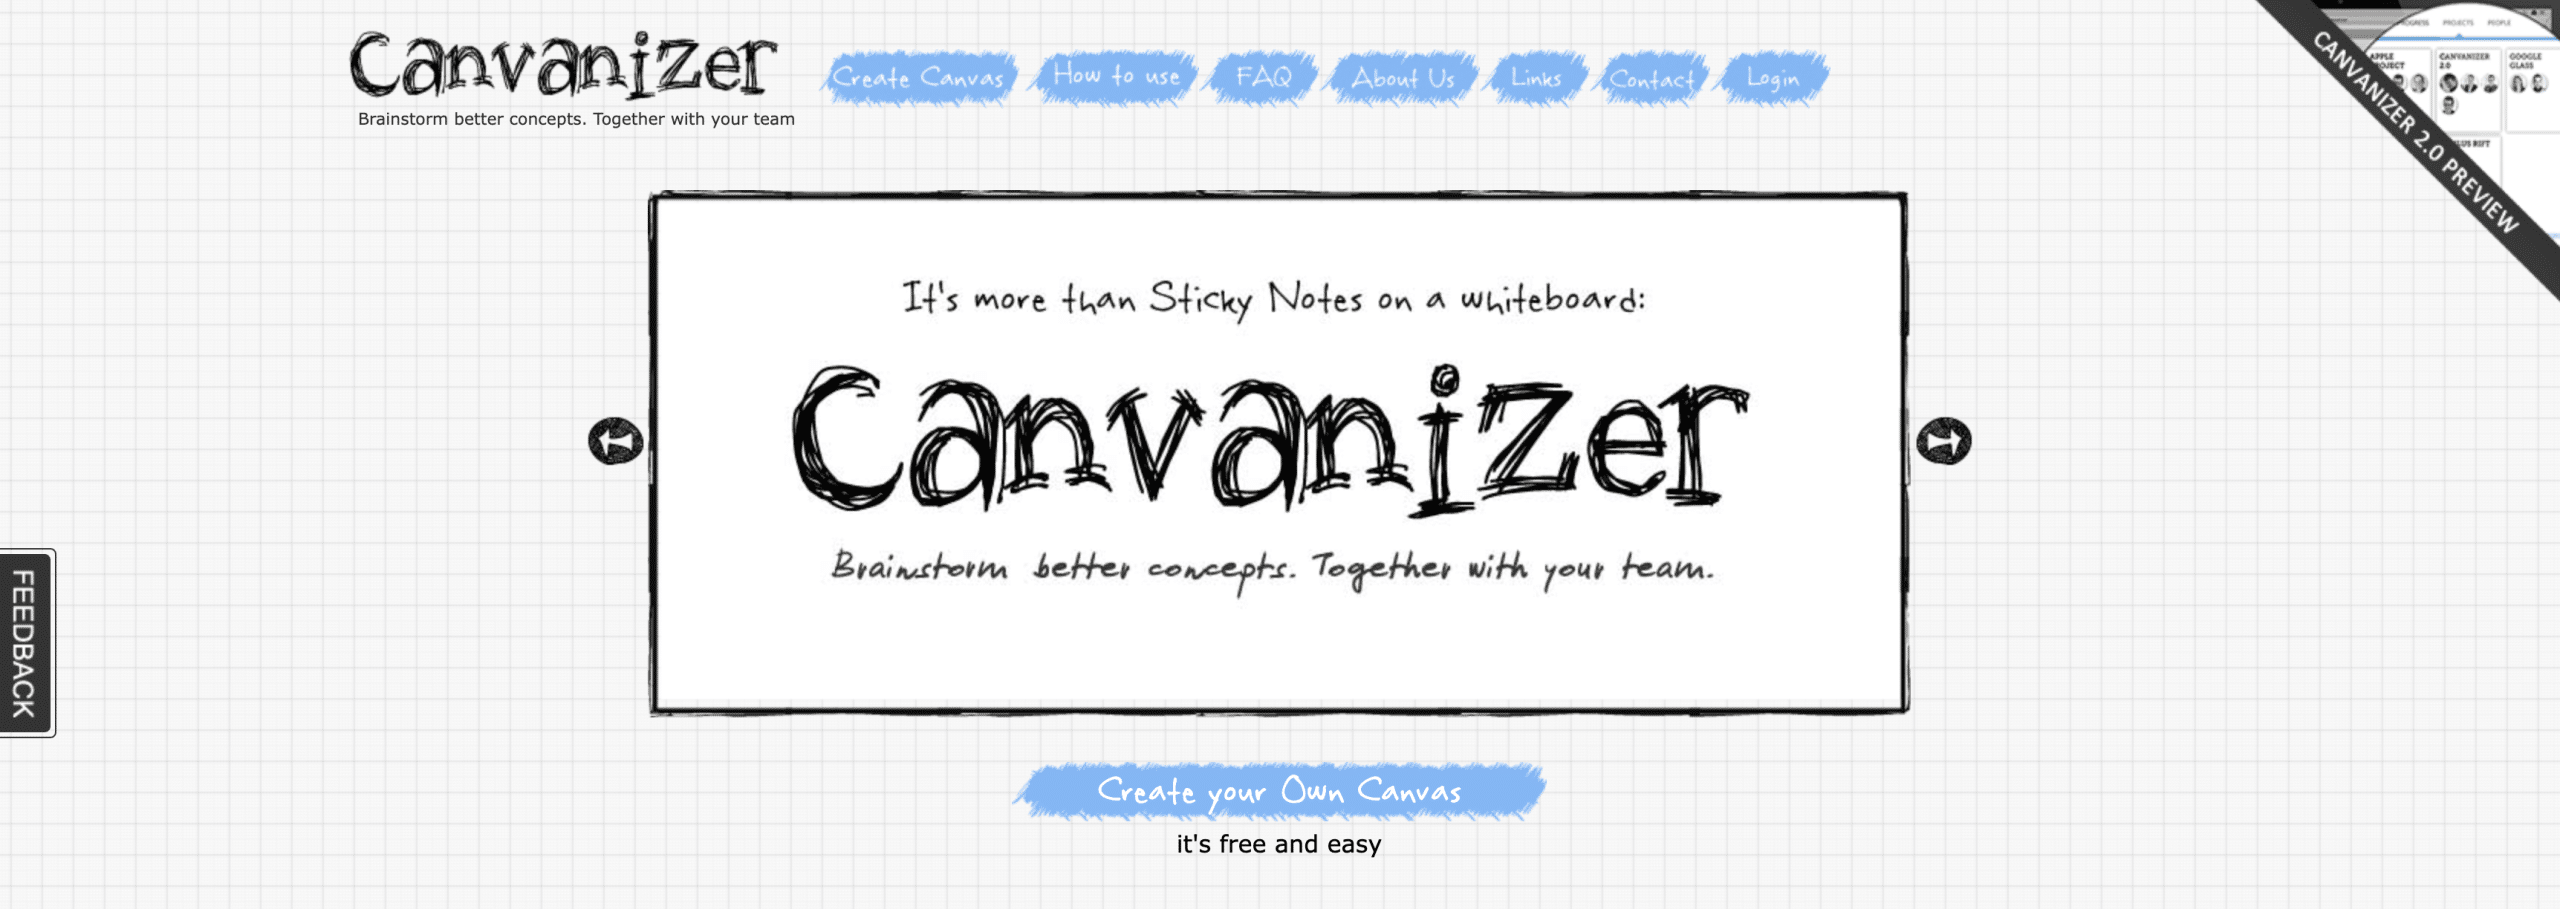 screenshot shows Canvanizer homepage